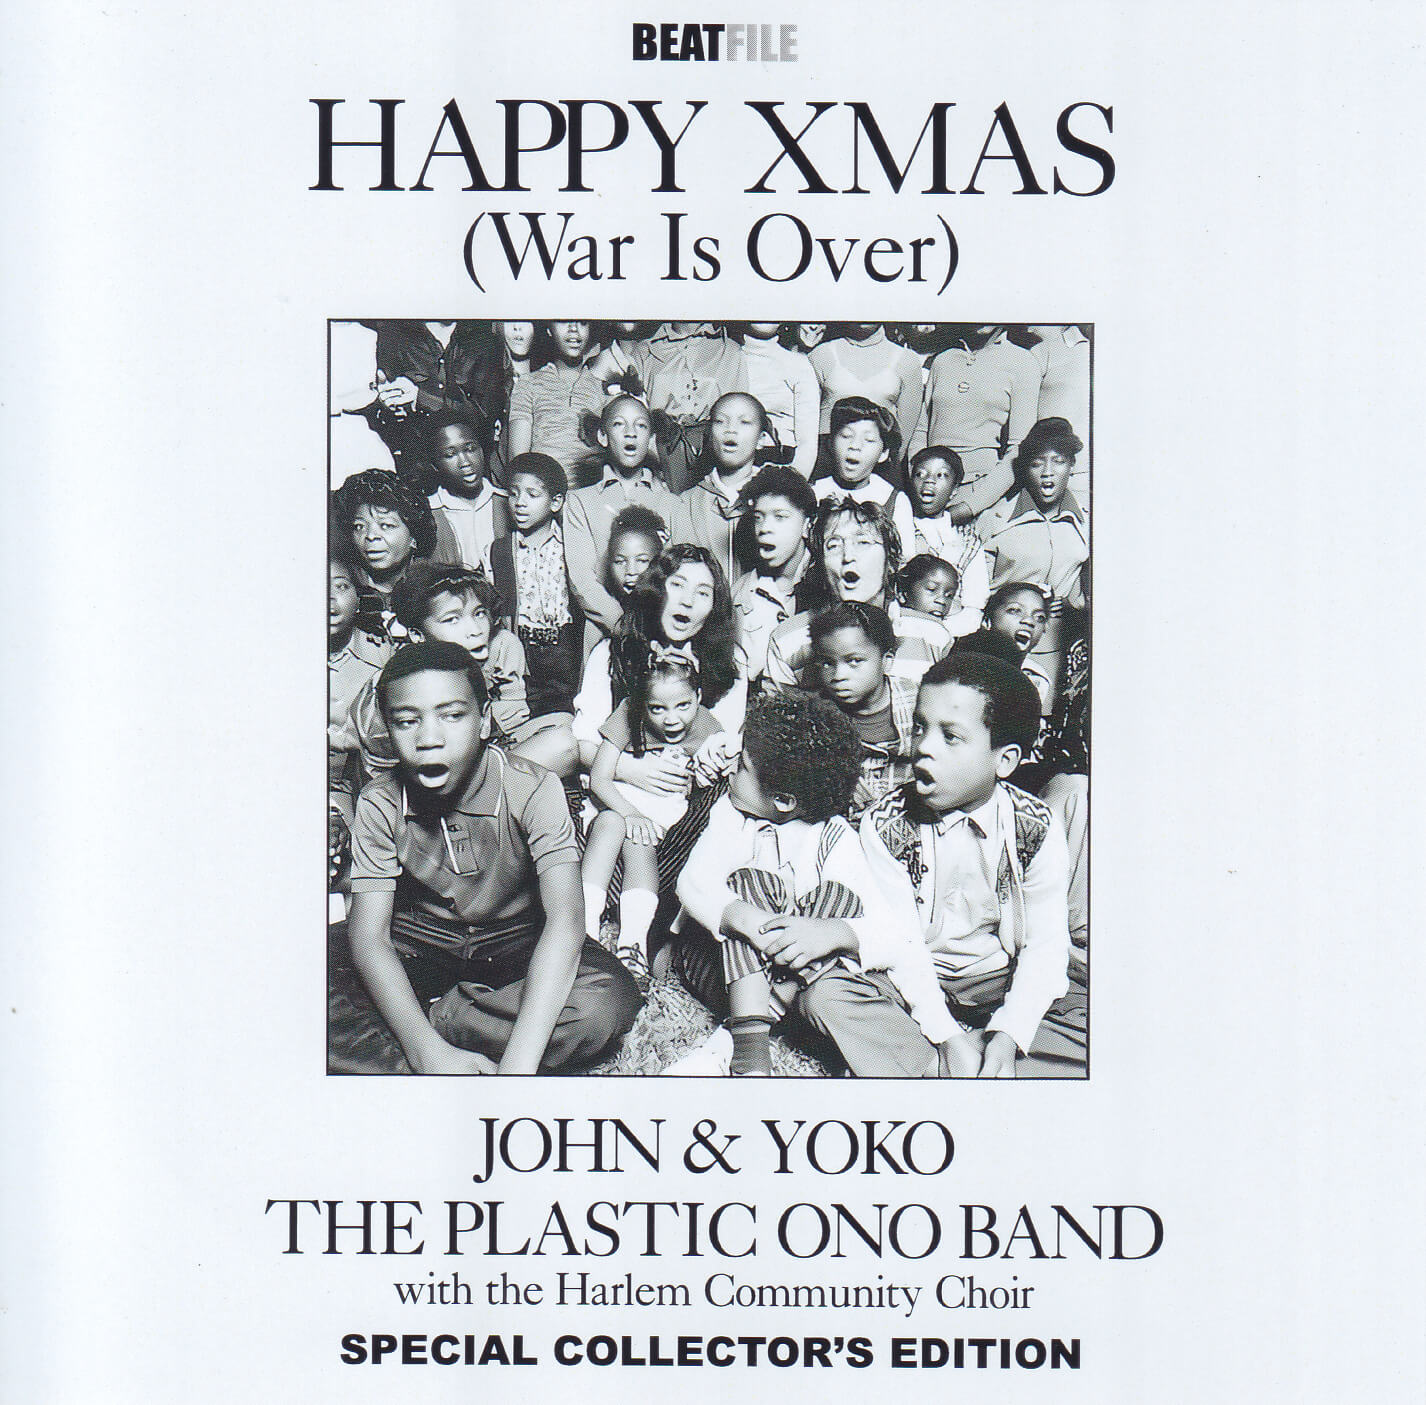 John Lennon and Yoko Ono: PM's 'War is Over' Christmas card on show